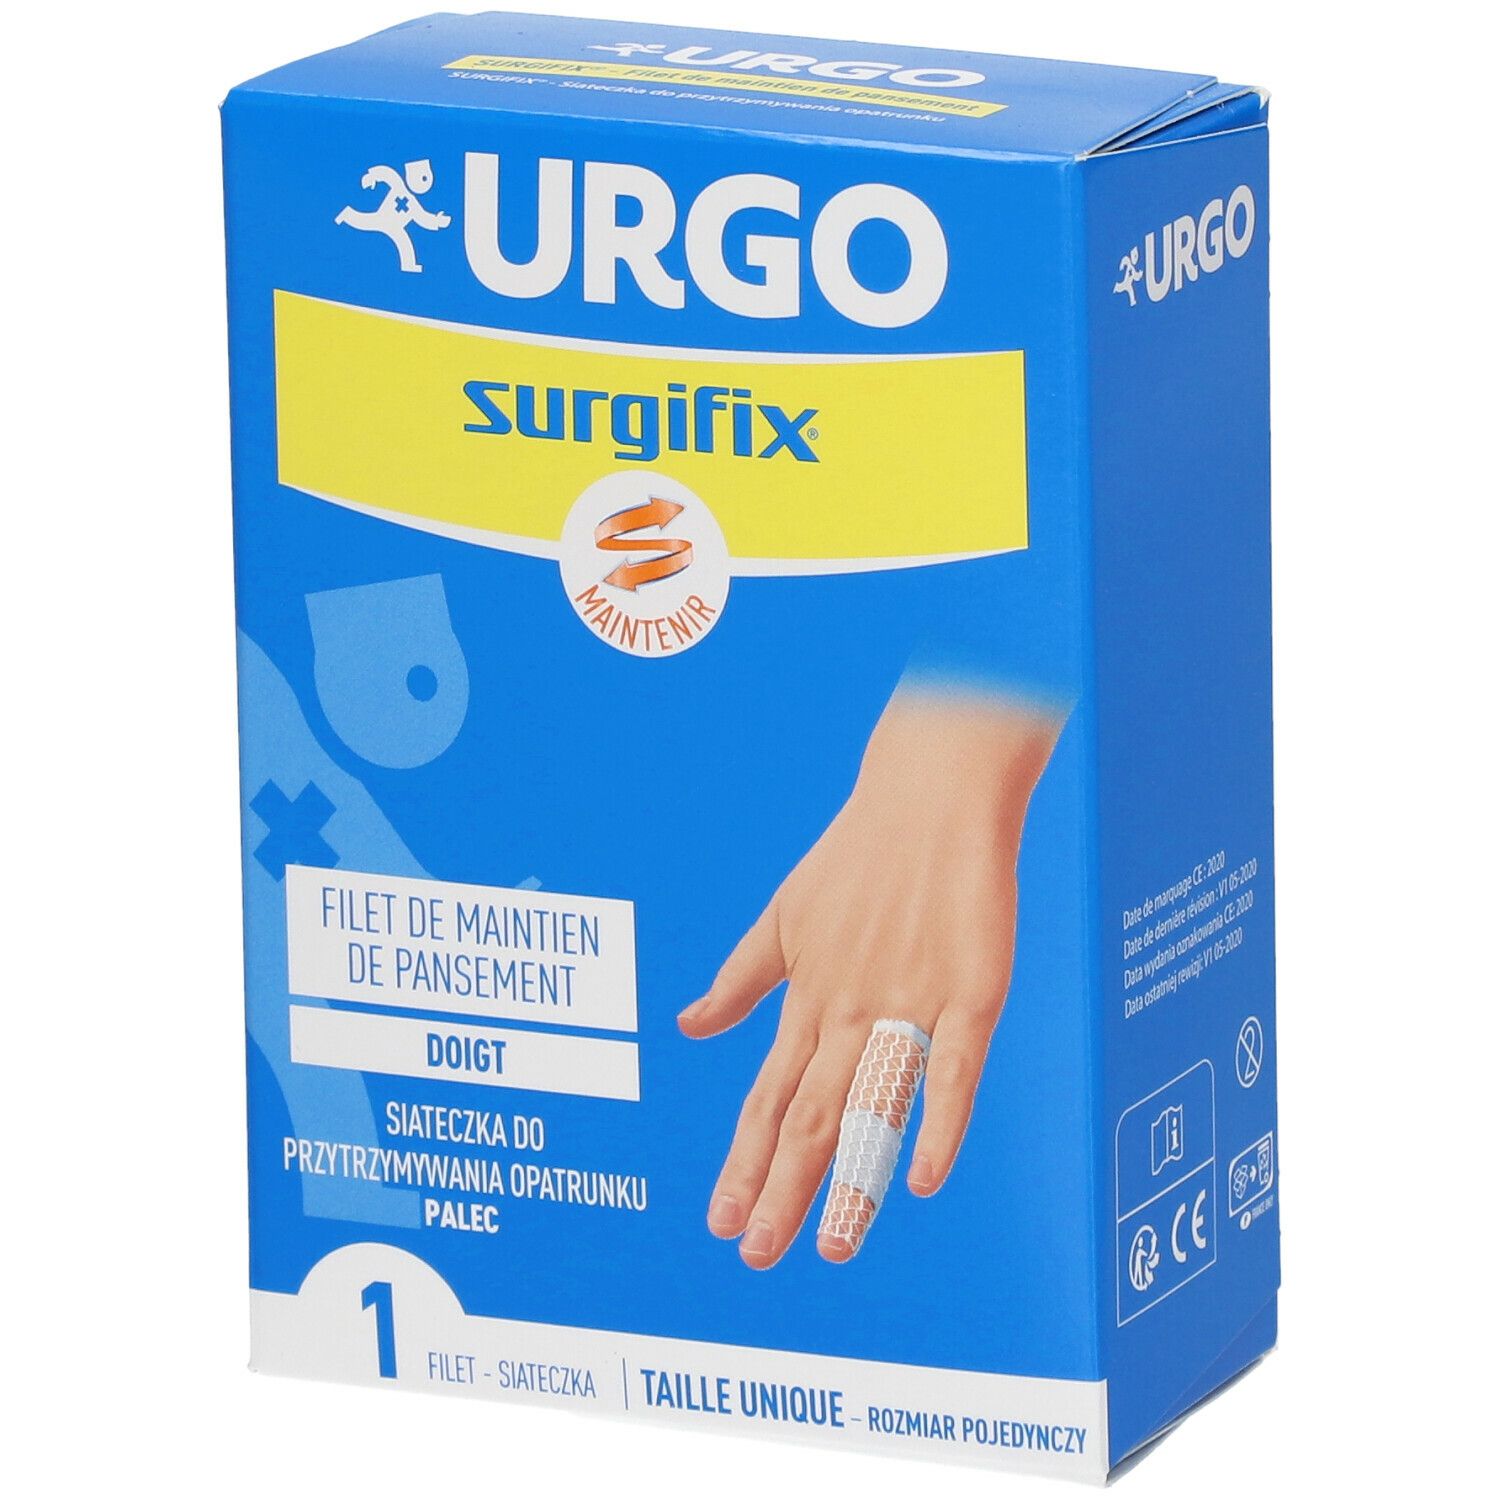 Urgo Surgifix® Filet de Maintien de pansement Doigt